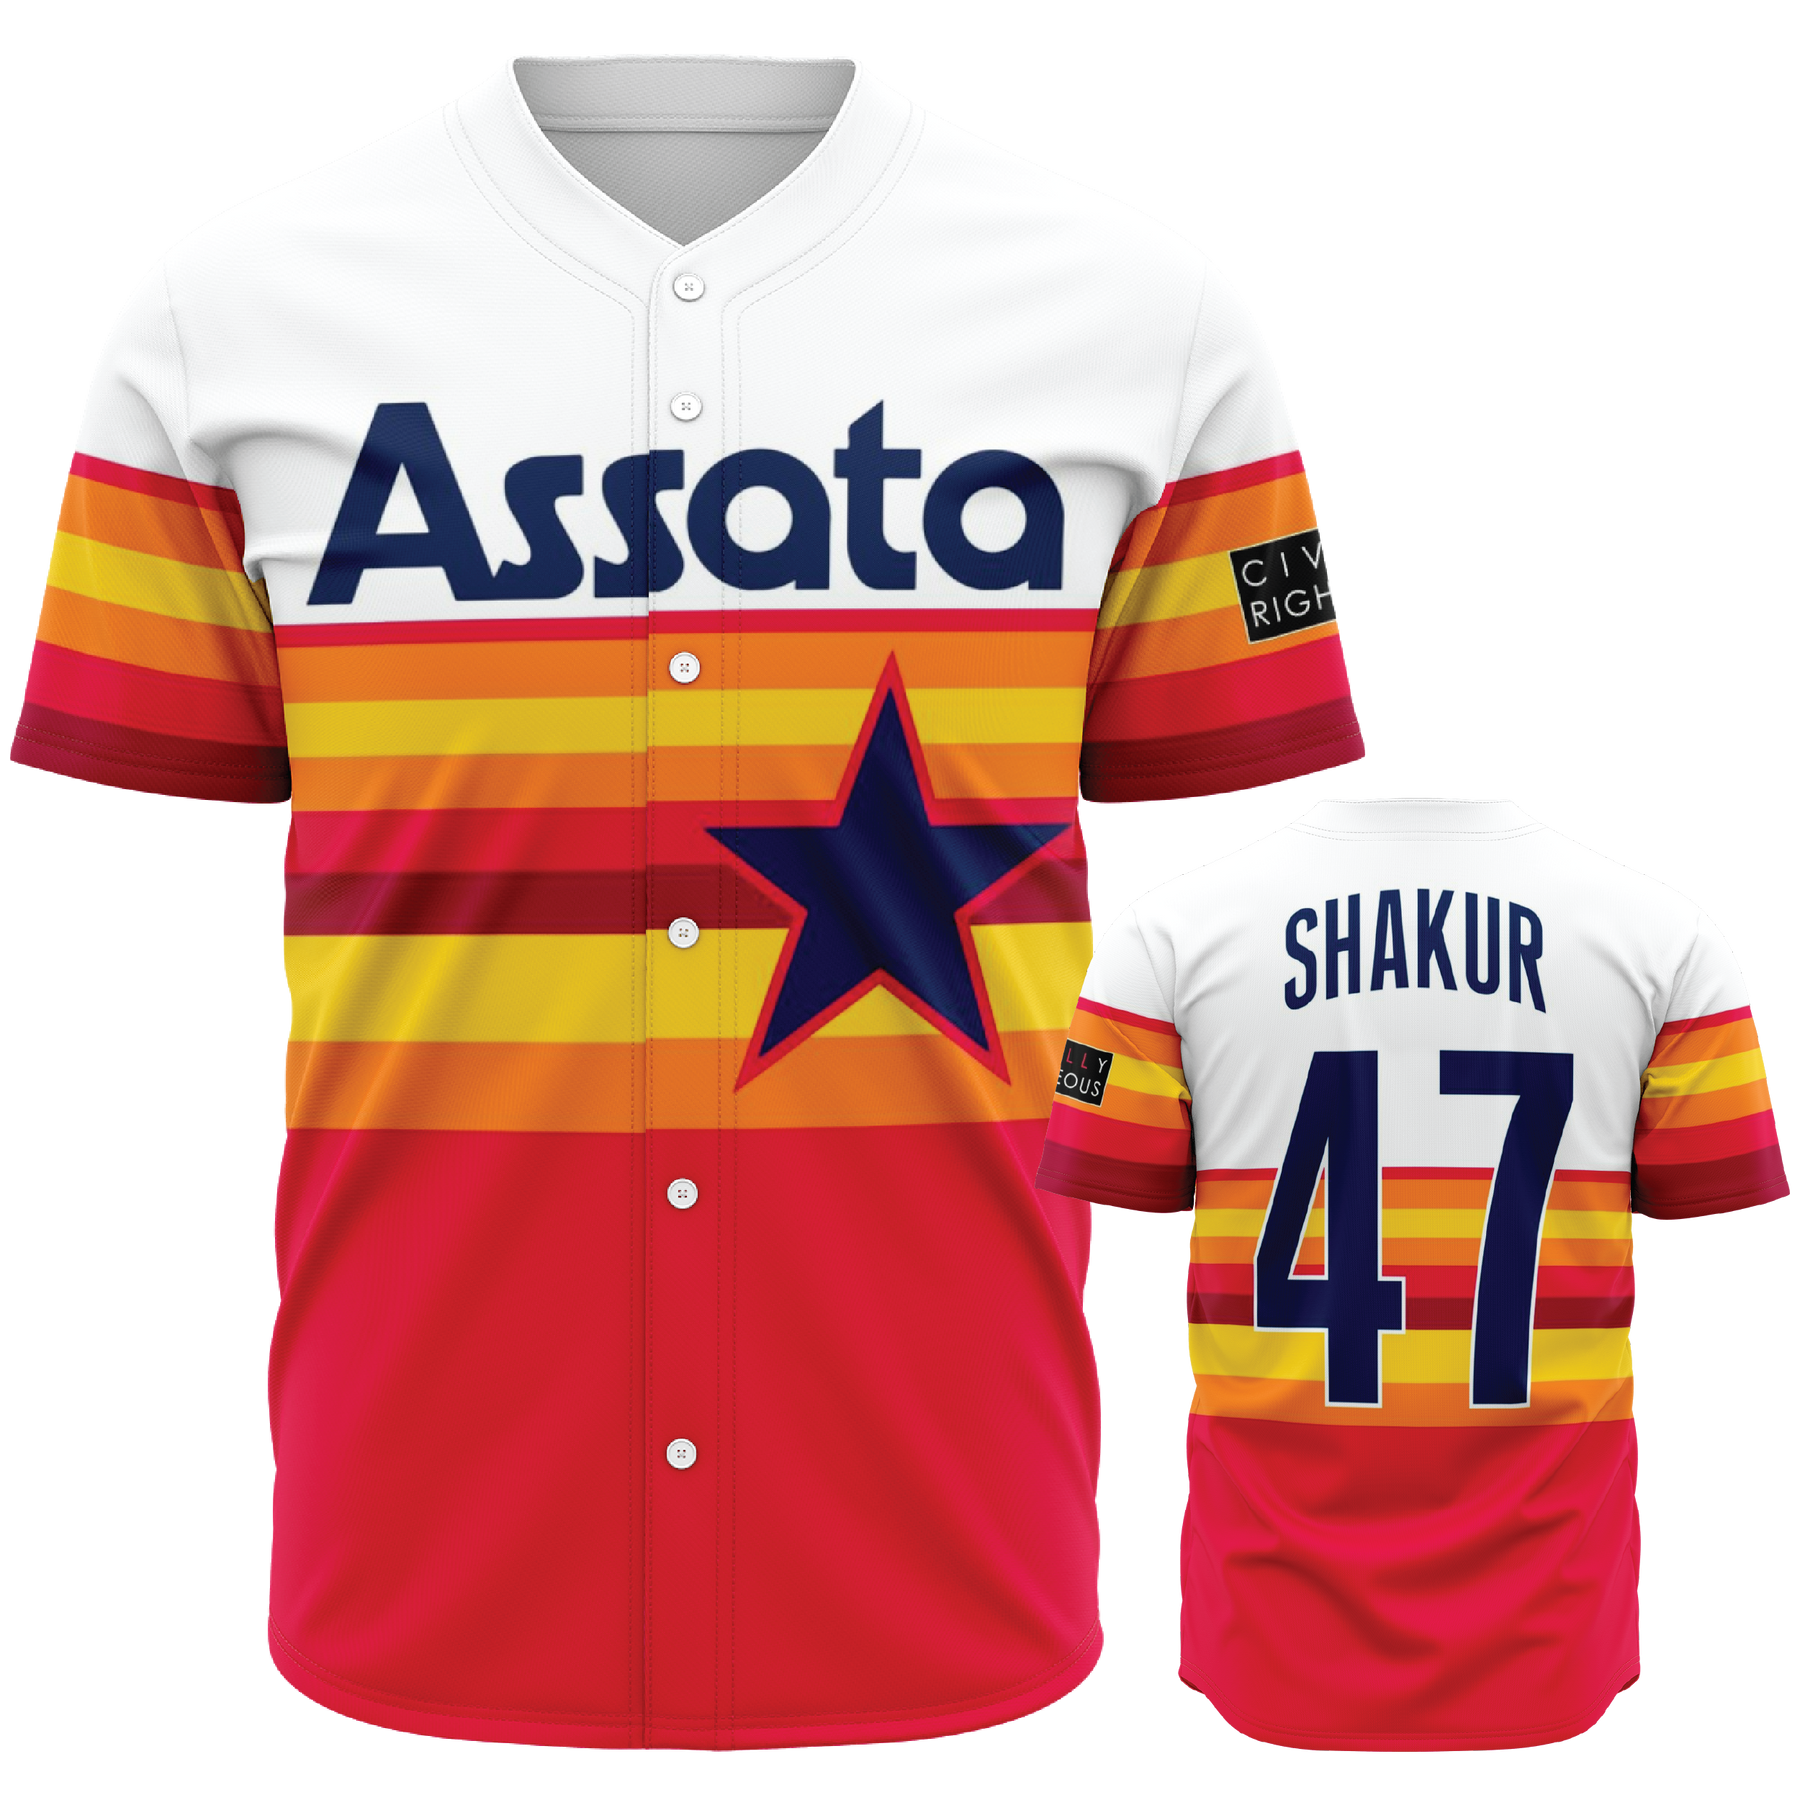 astros jersey 1980